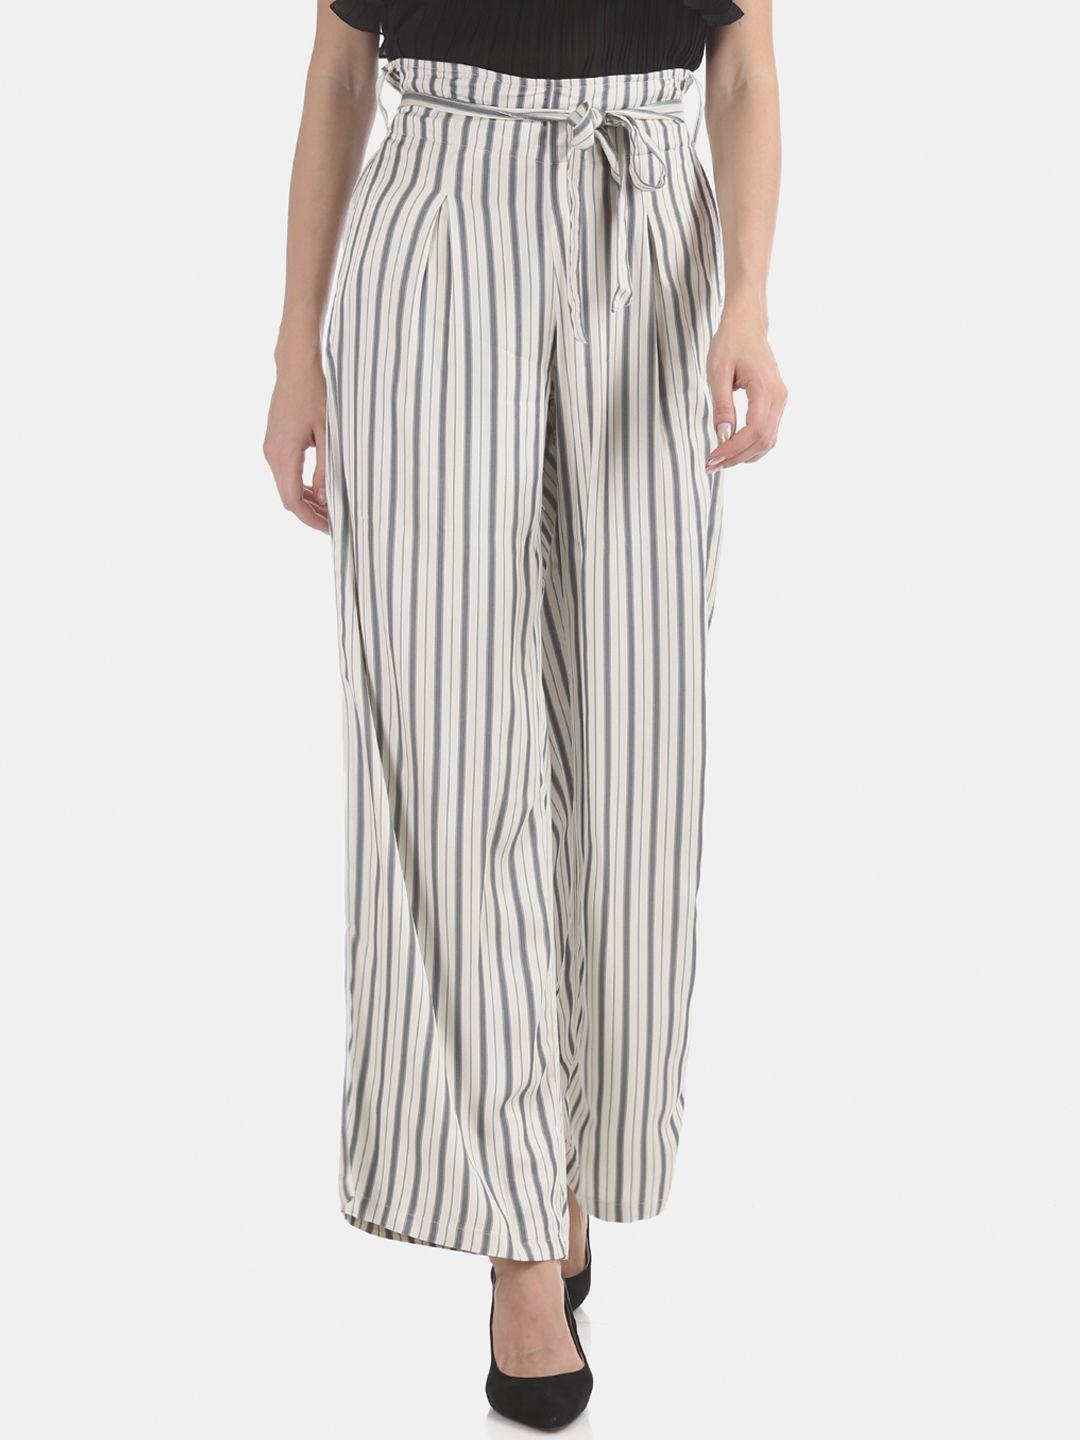 u.s. polo assn. women white & grey regular fit striped peg trousers